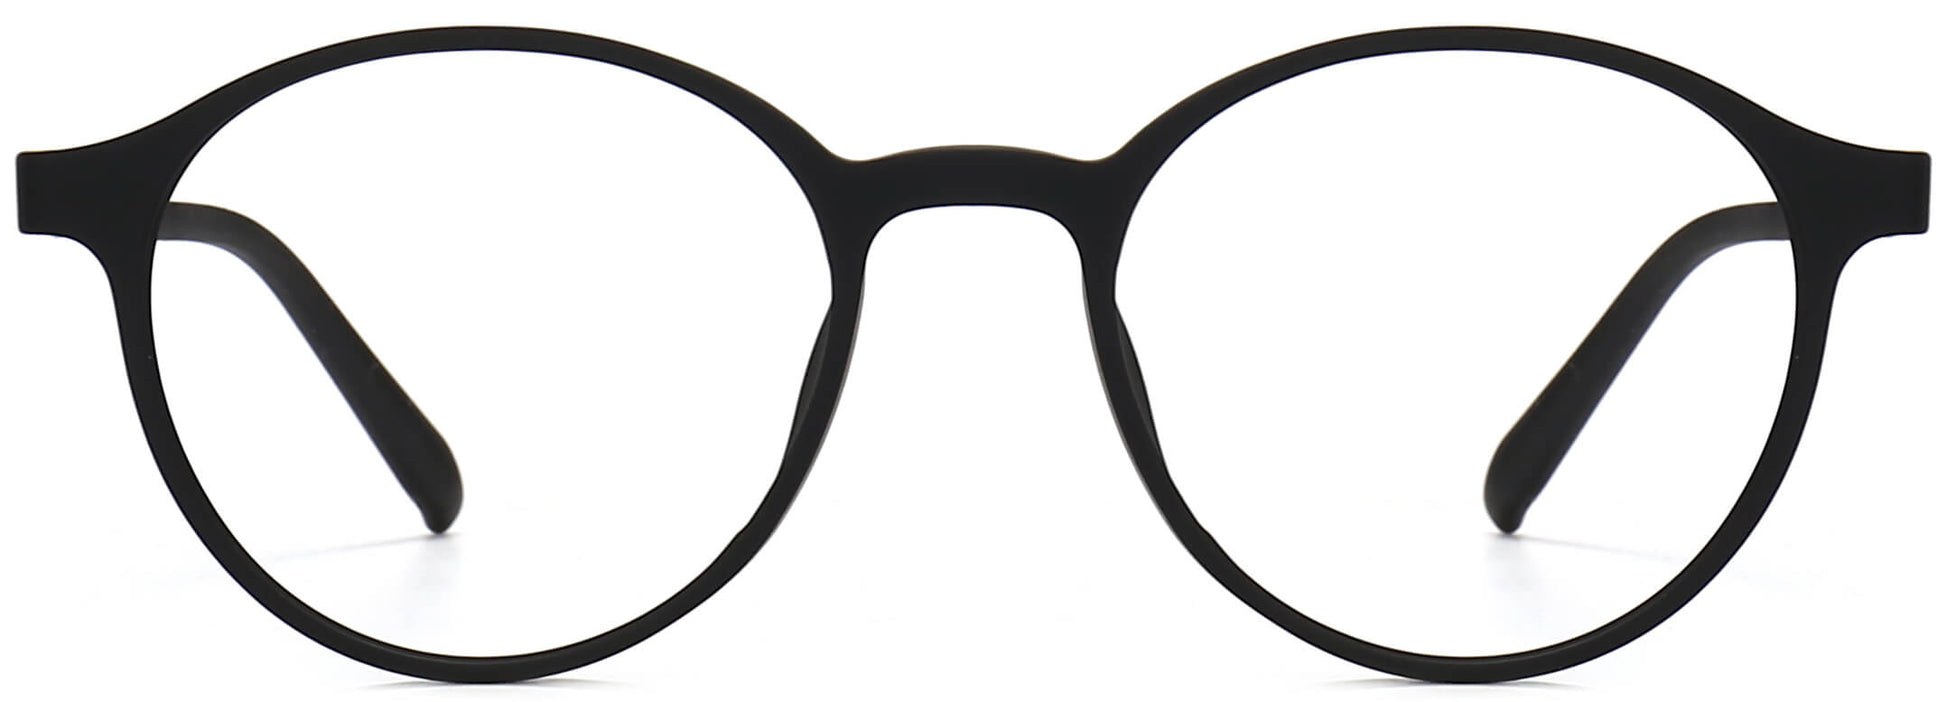 Karsyn Round Black Eyeglasses from ANRRI, front view